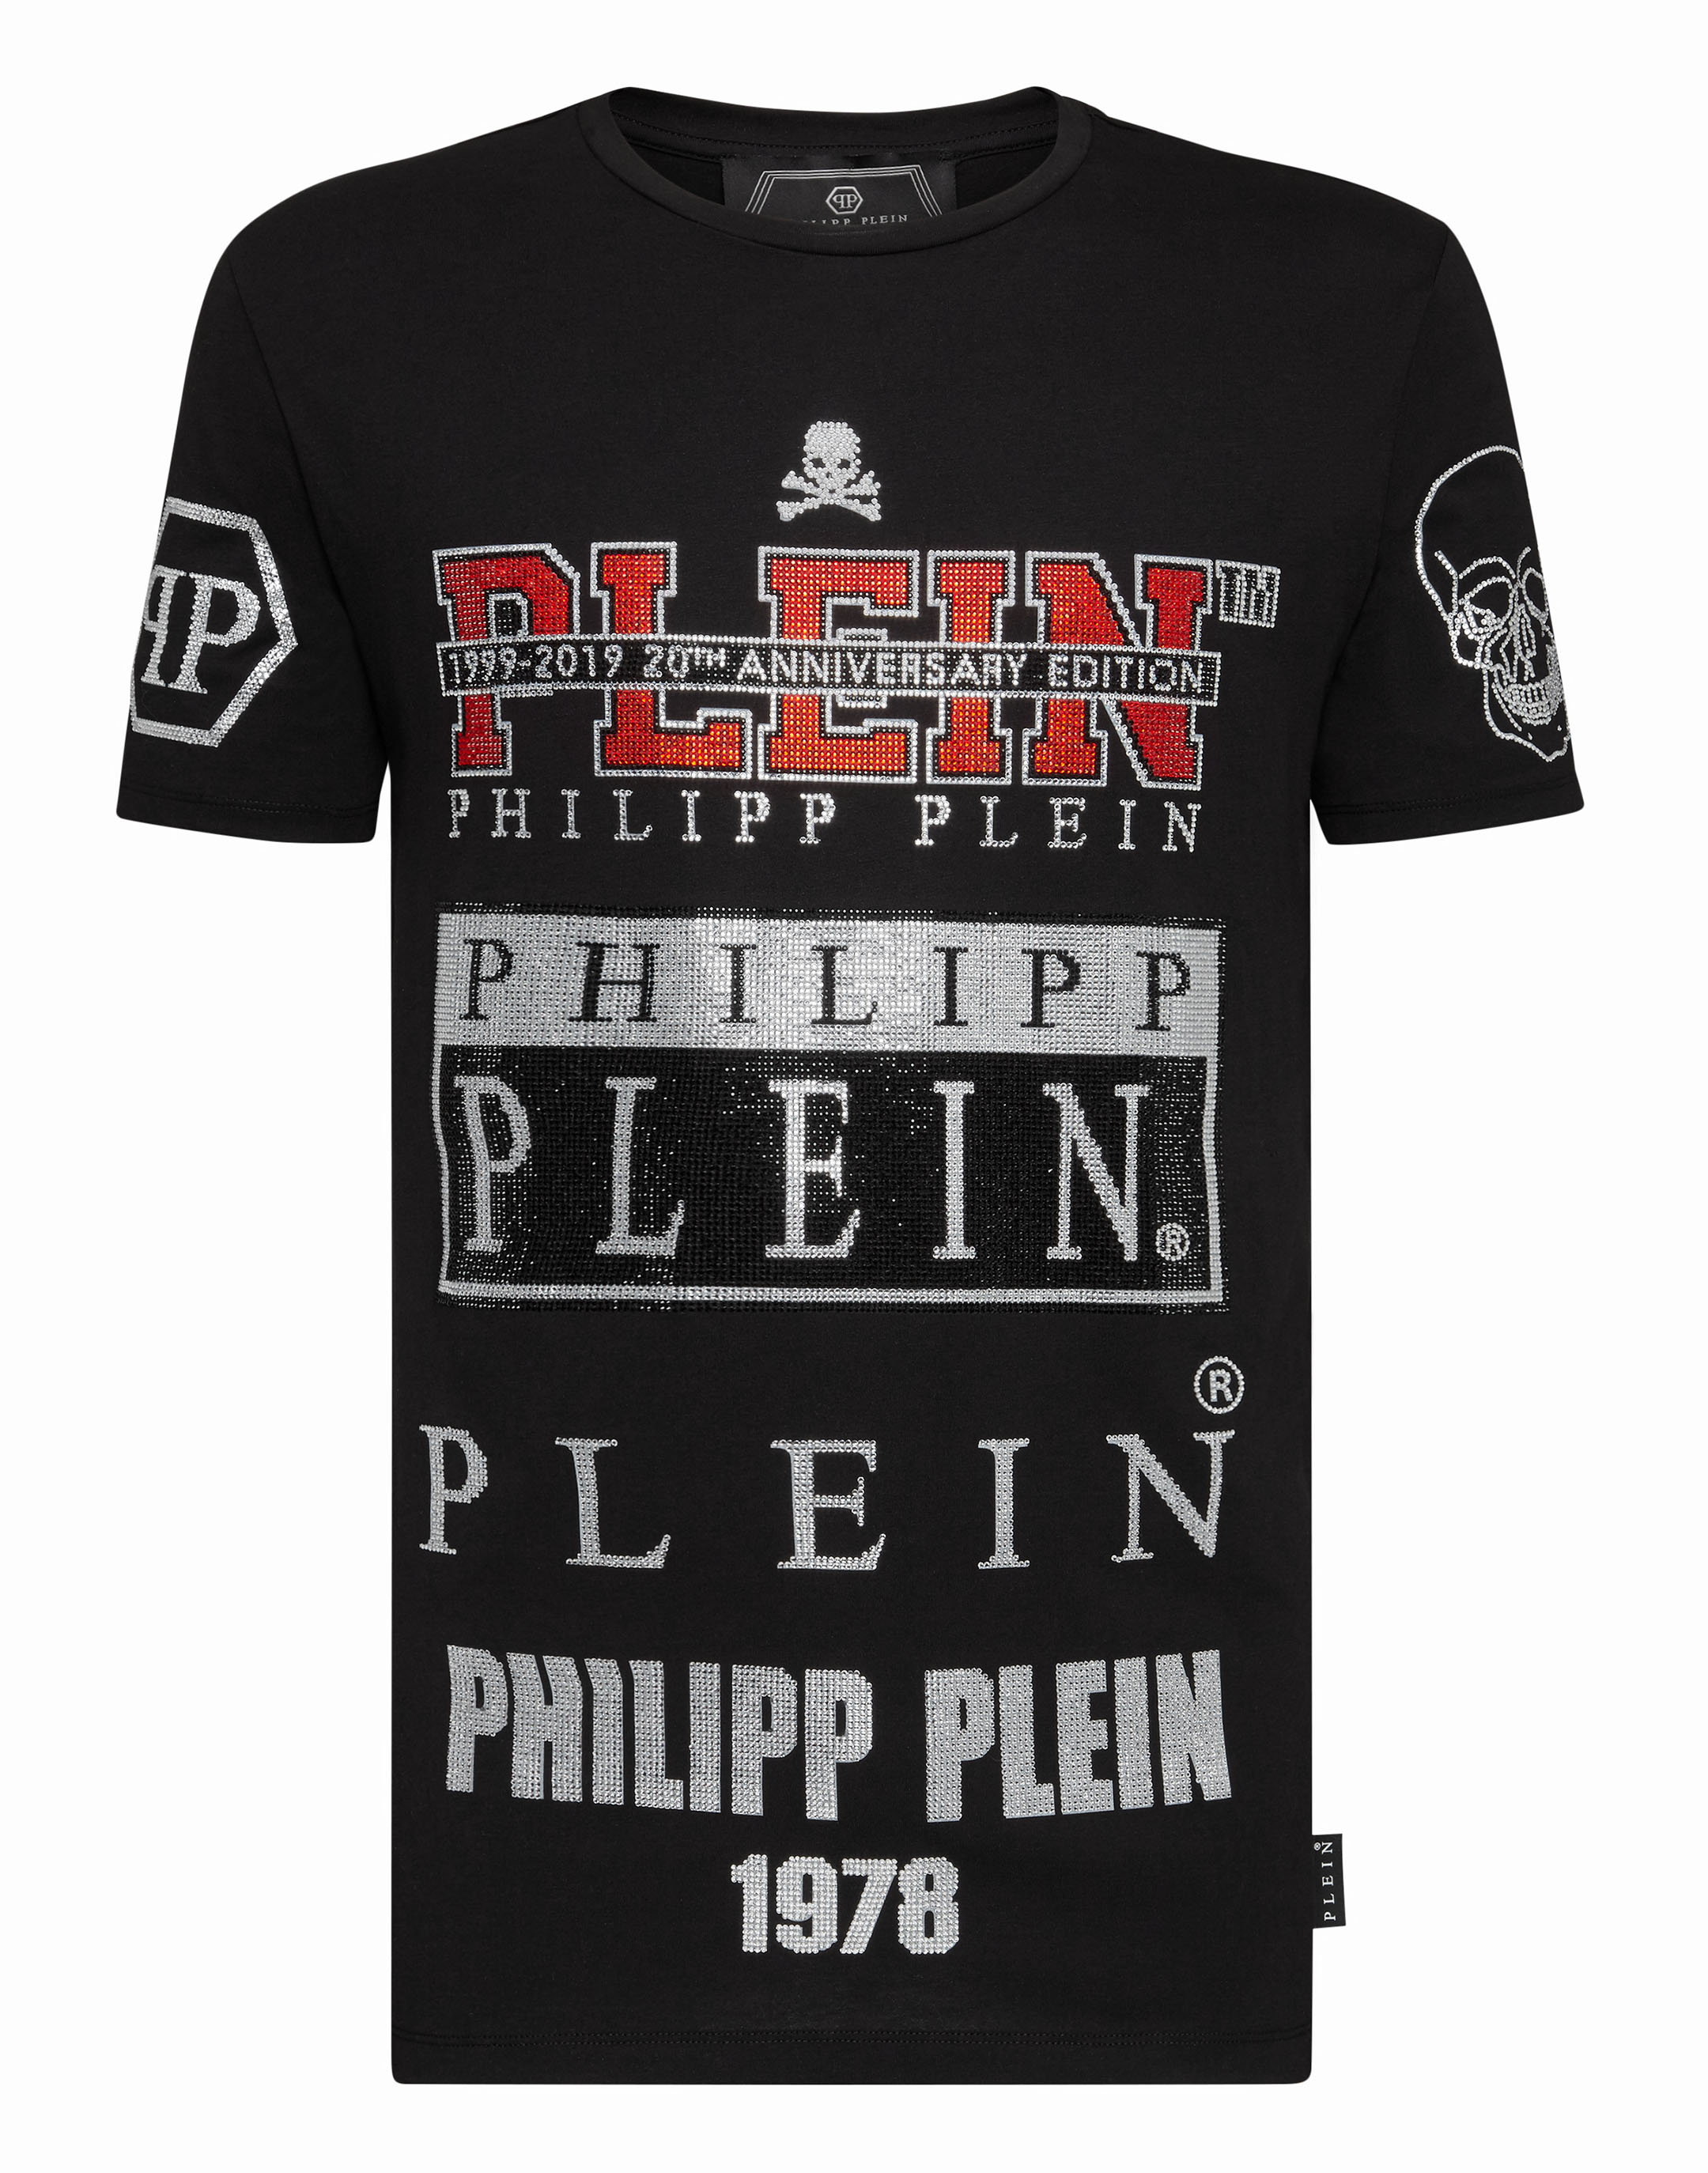 T-shirt Platinum Cut Round Neck Logos | Philipp Plein Outlet